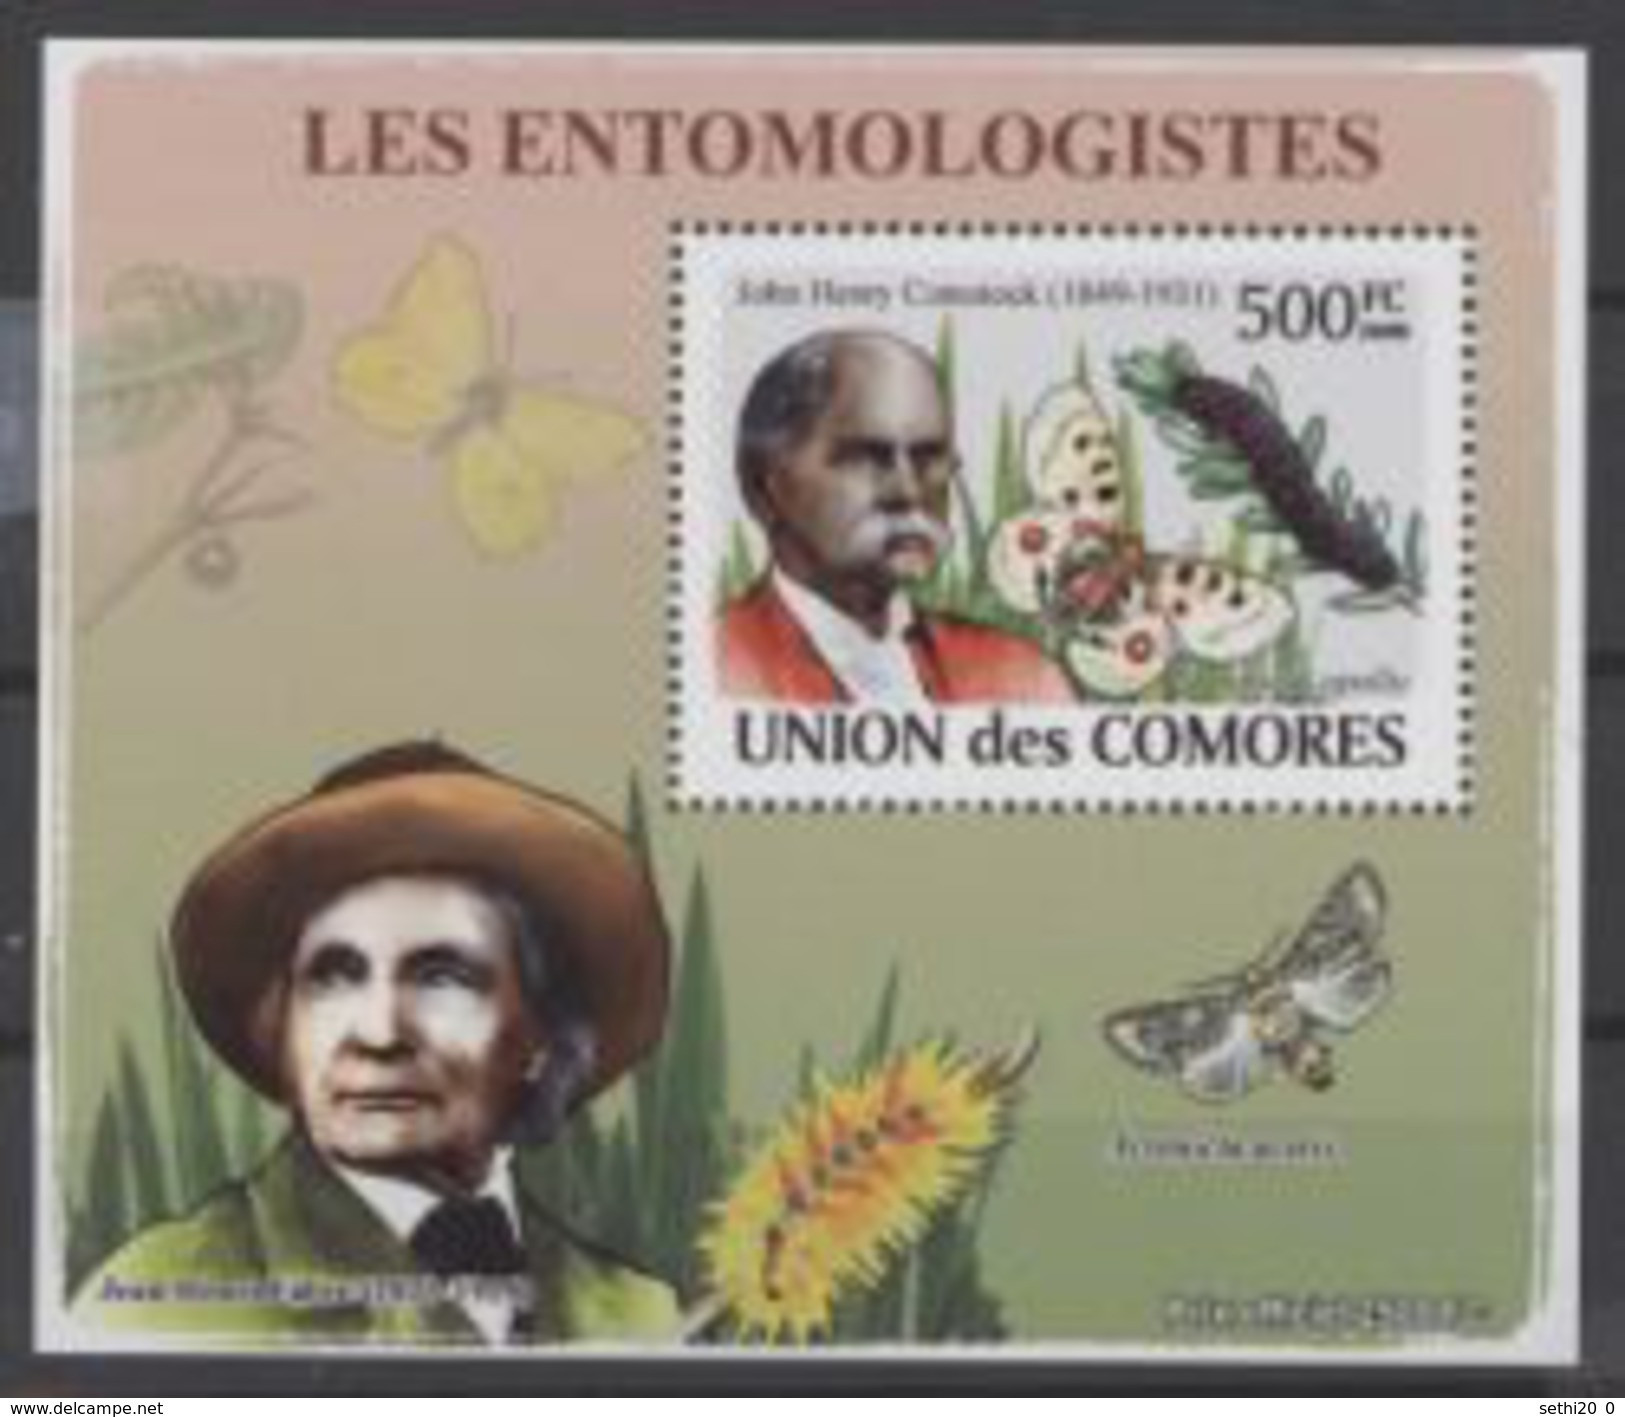 Comores John Henry COMSTOCK Jean Henri FABRE  On Margin Entomologists Butterfly Papillon  BF Luxe Perf - Butterflies